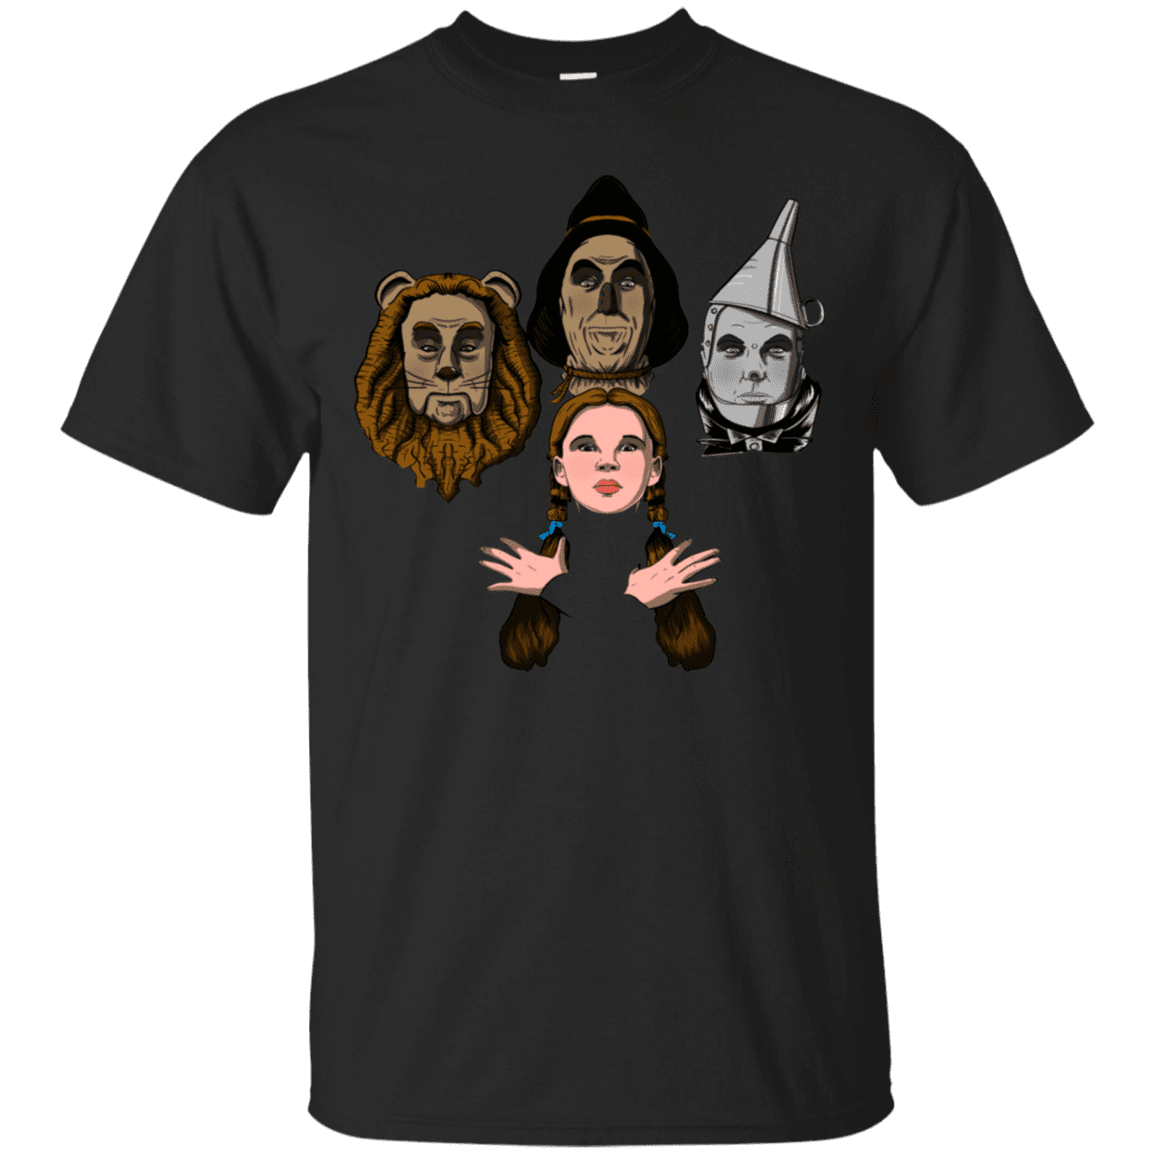 T-Shirts Black / S Oz Rhapsody T-Shirt